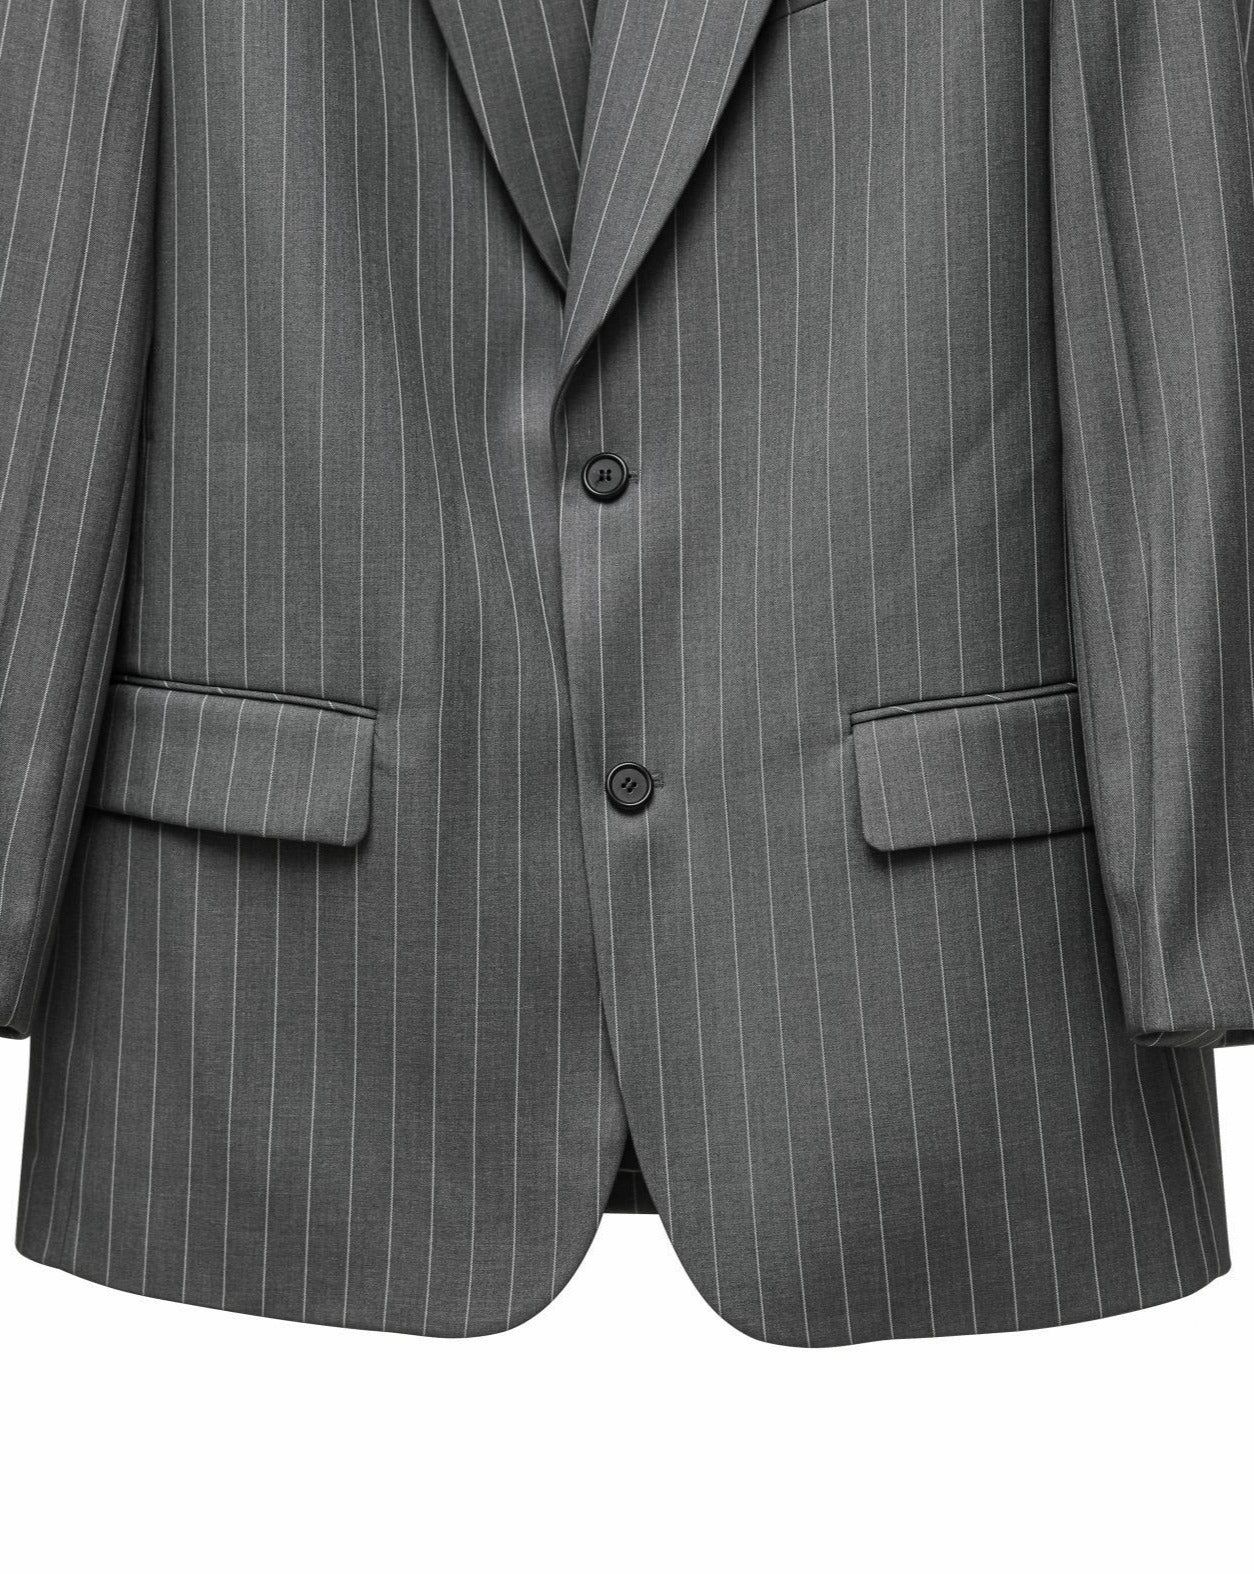 [PAPERMOON] SS / Wide Pin Stripe Set Up Suit Single Blazer